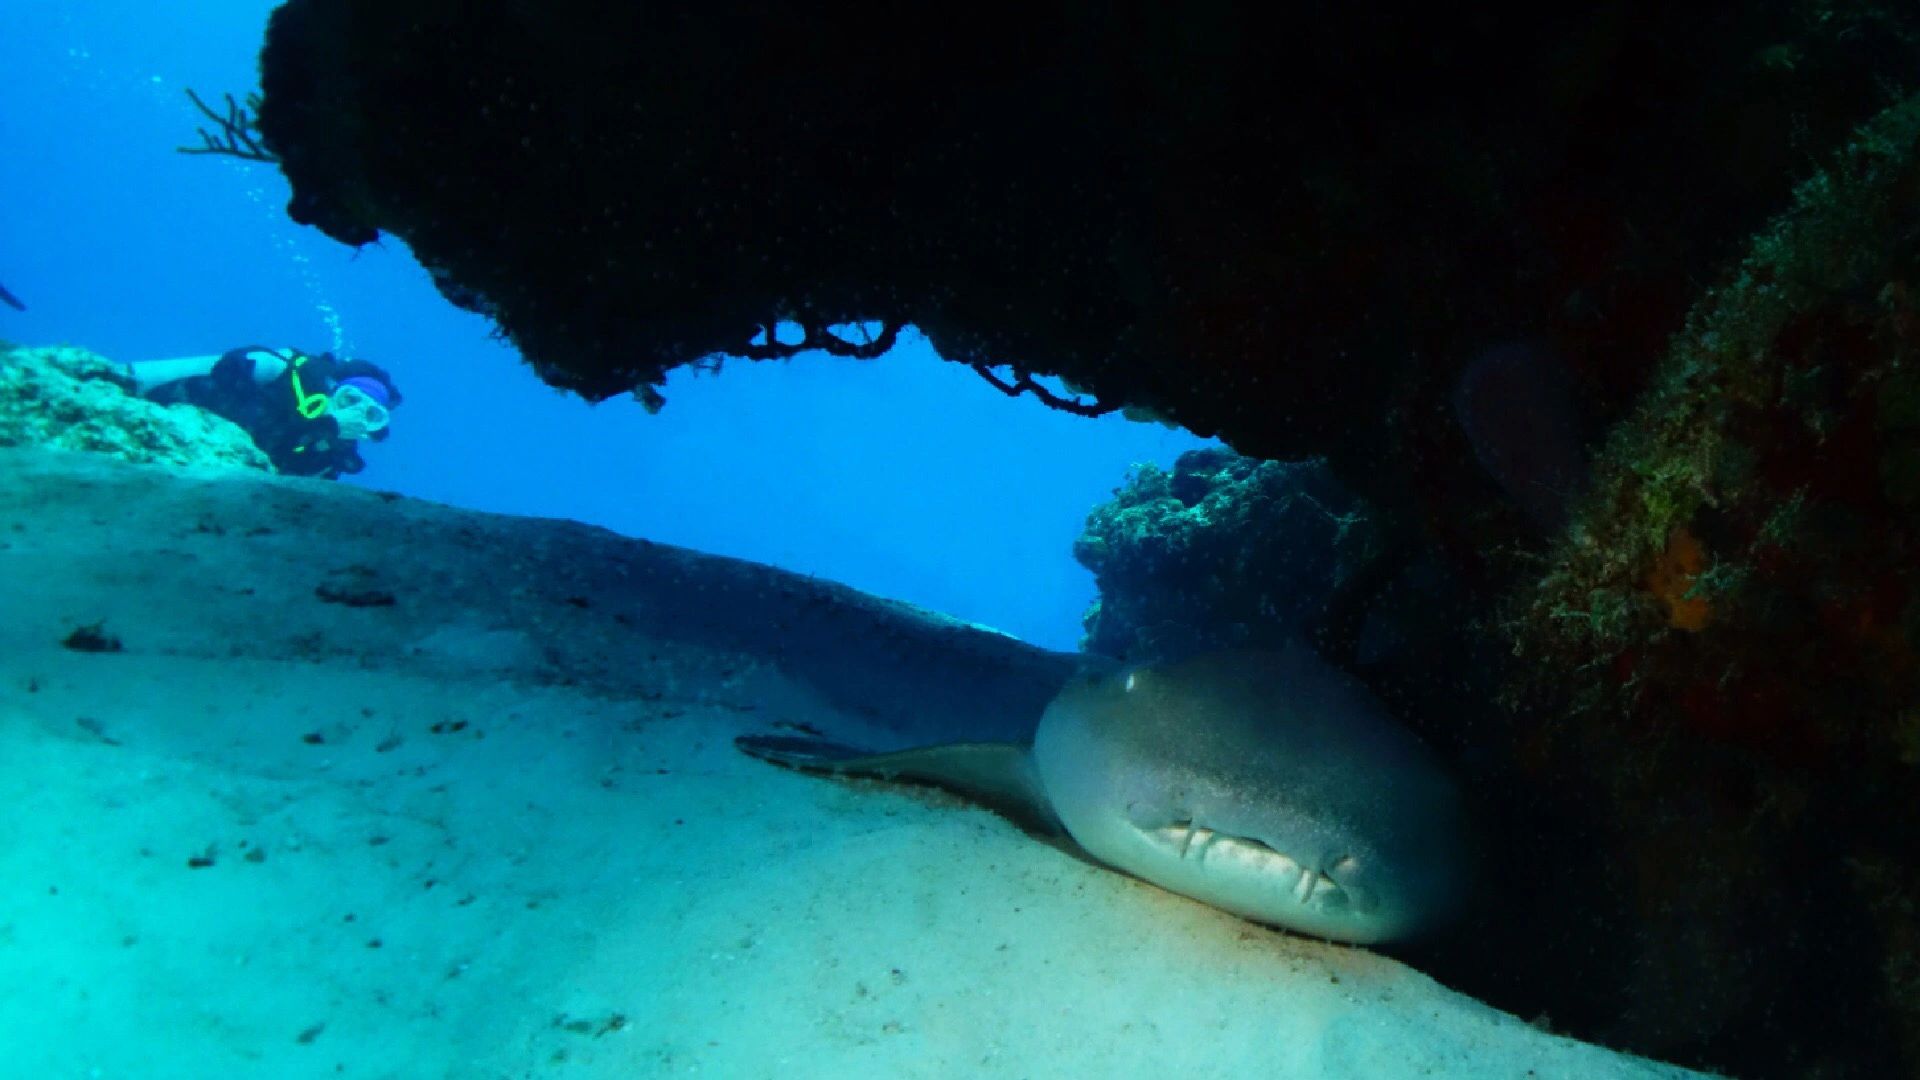 Scuba diver checking out a sleeping nurse shark under a ledge off the coast of Cozumel, Mexico.